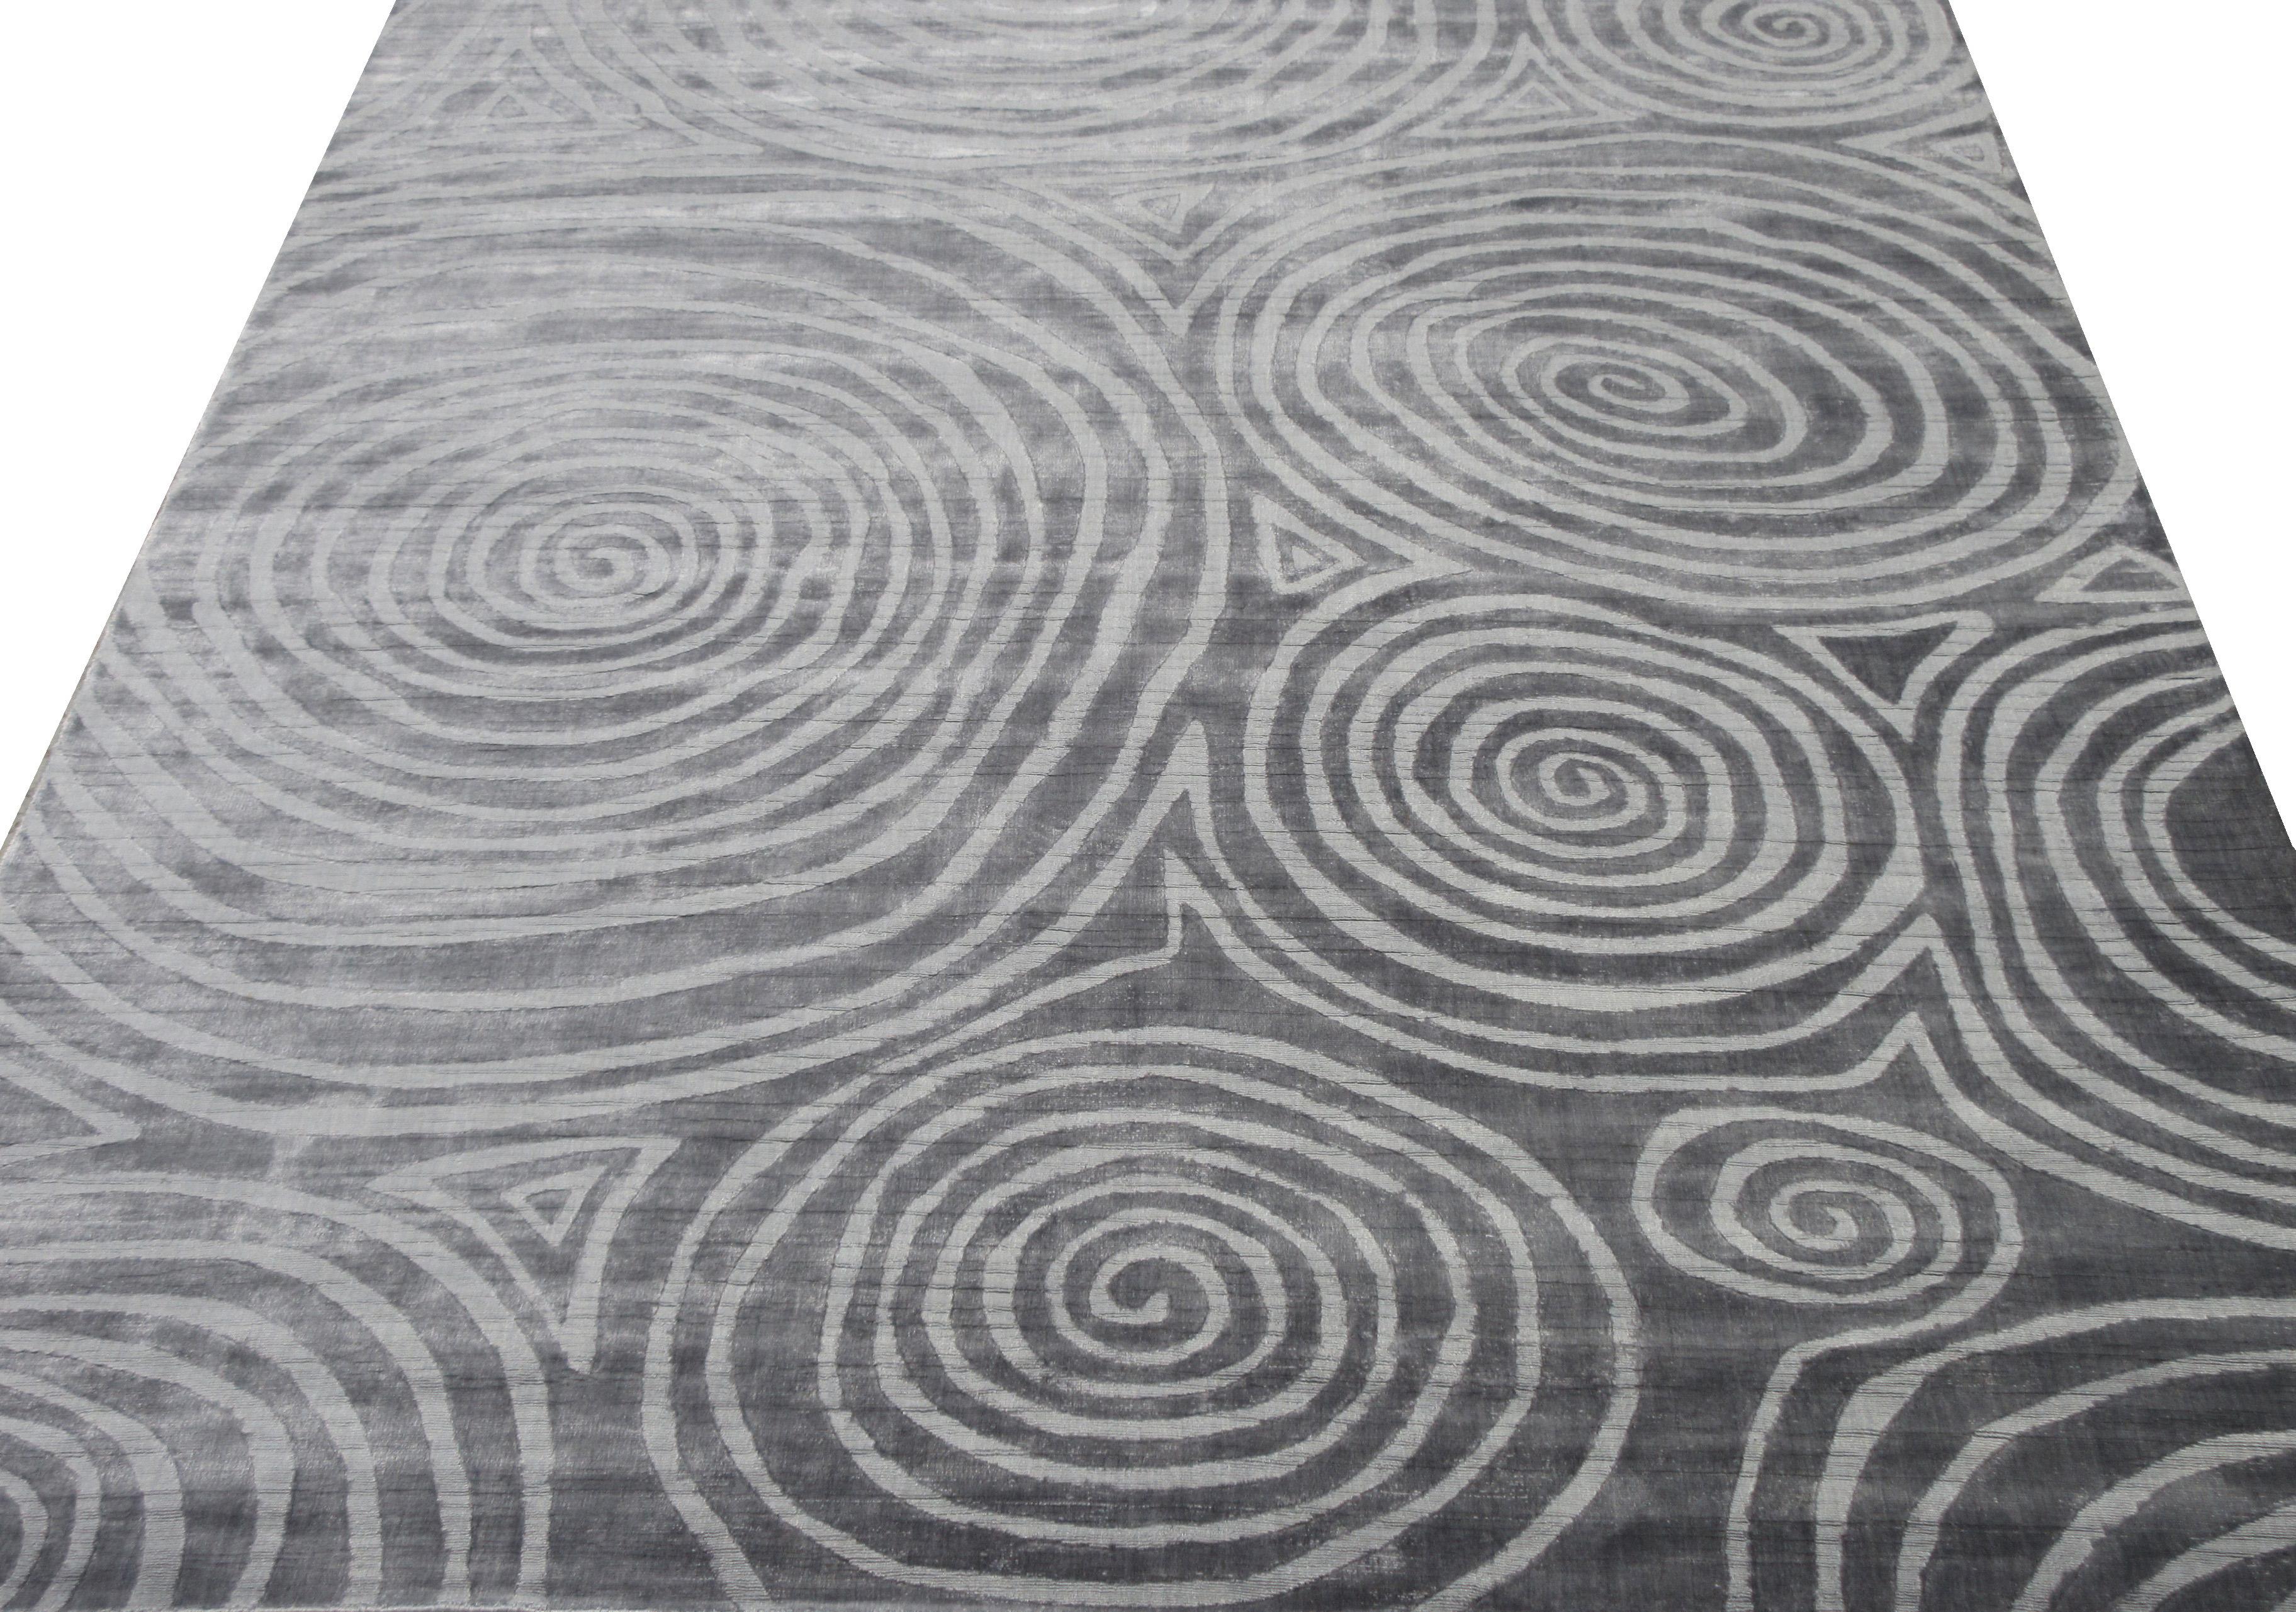 Handmade art silk pile on a cotton foundation.

Modern spiral design

Dimensions: 7'10